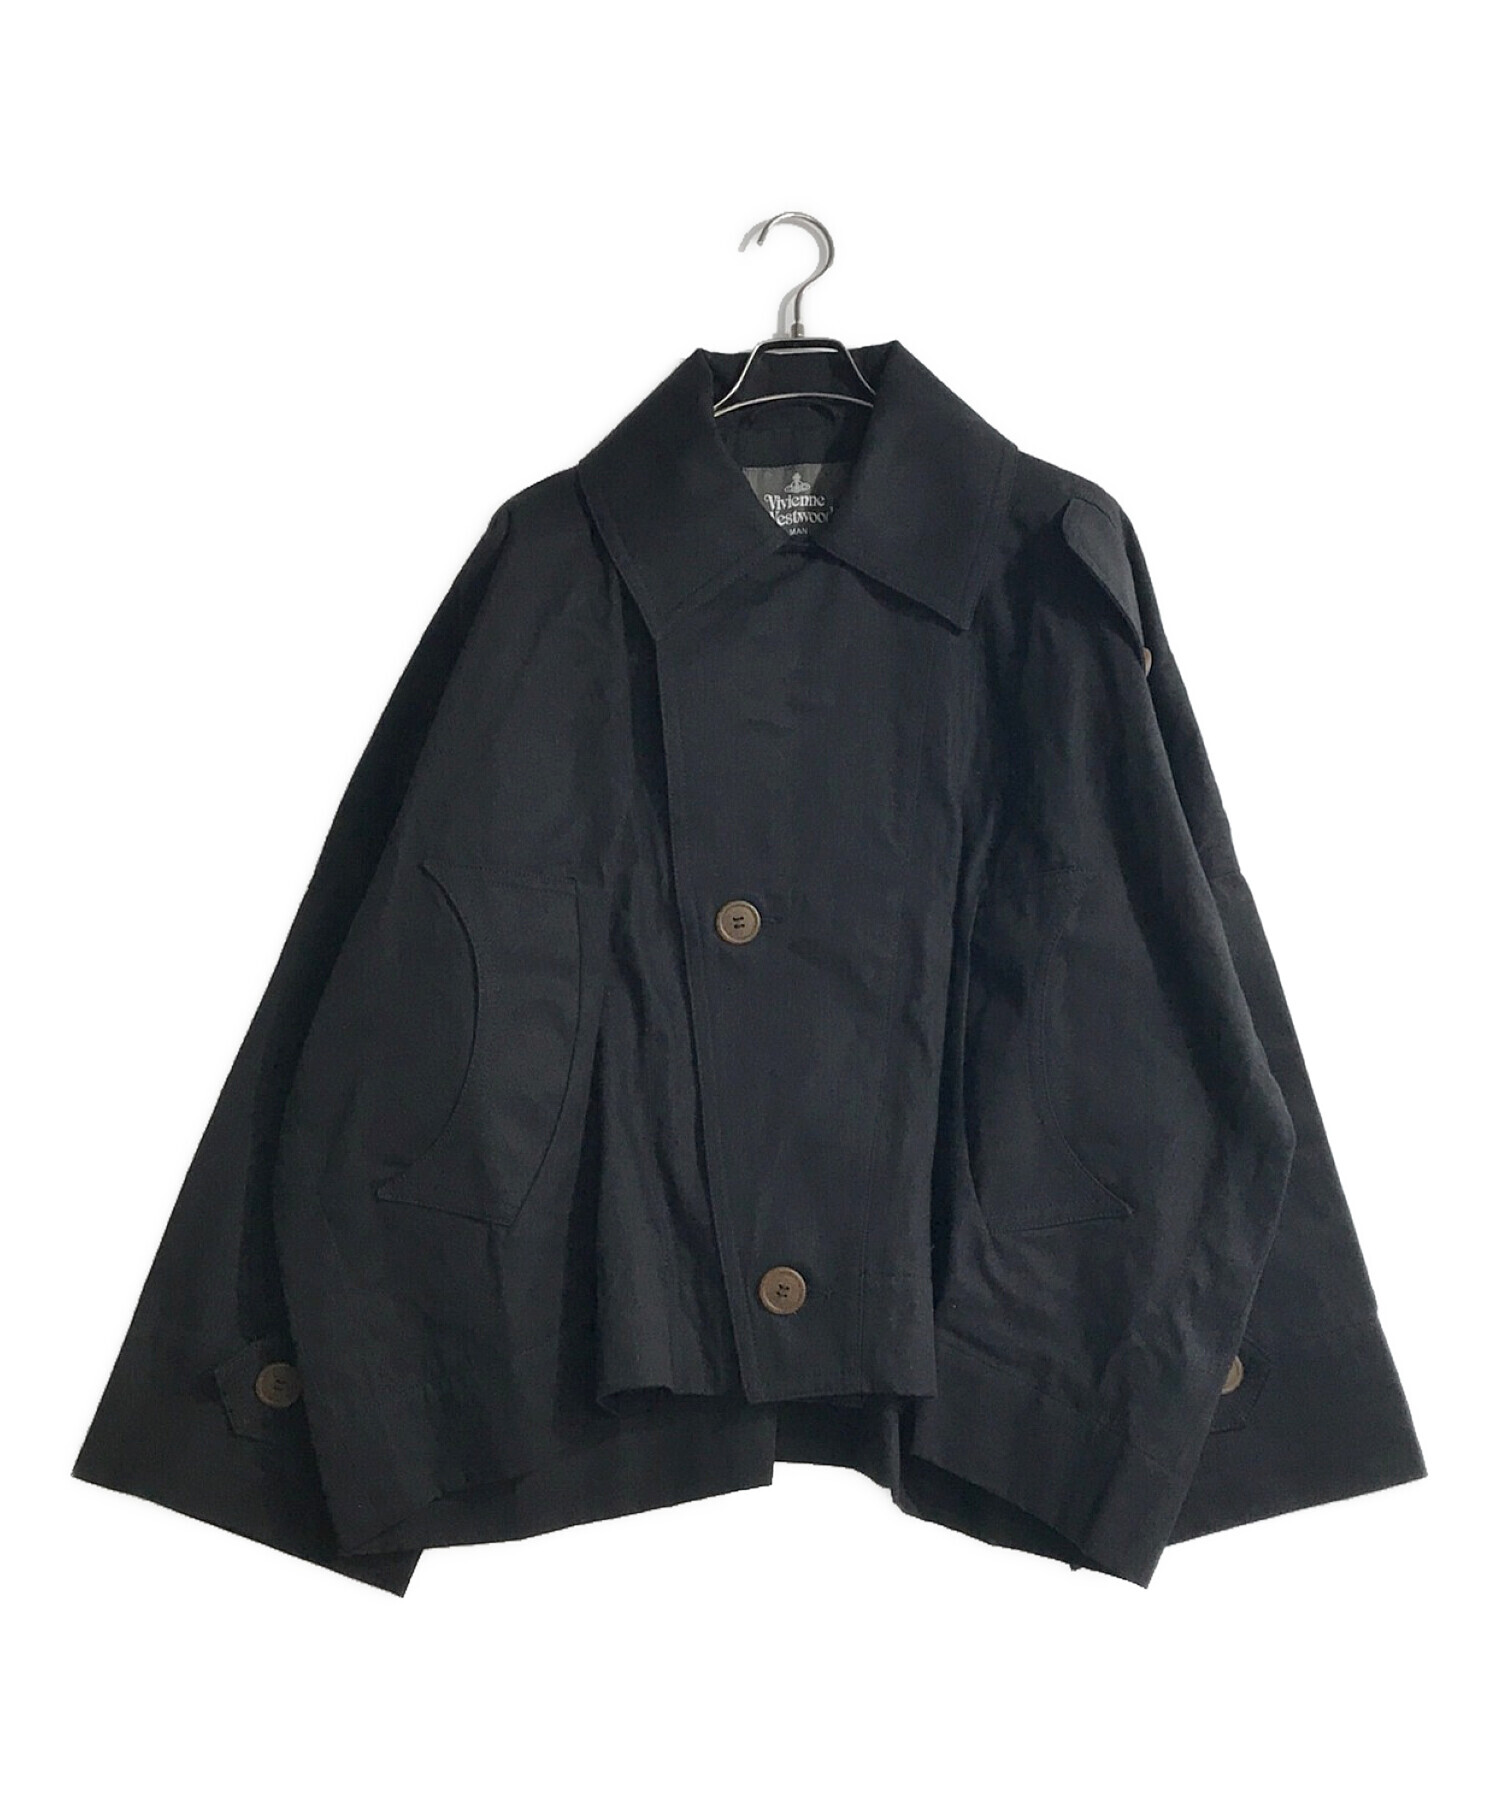 Vivienne Westwood 変形ジャケット定価60000くらいでした